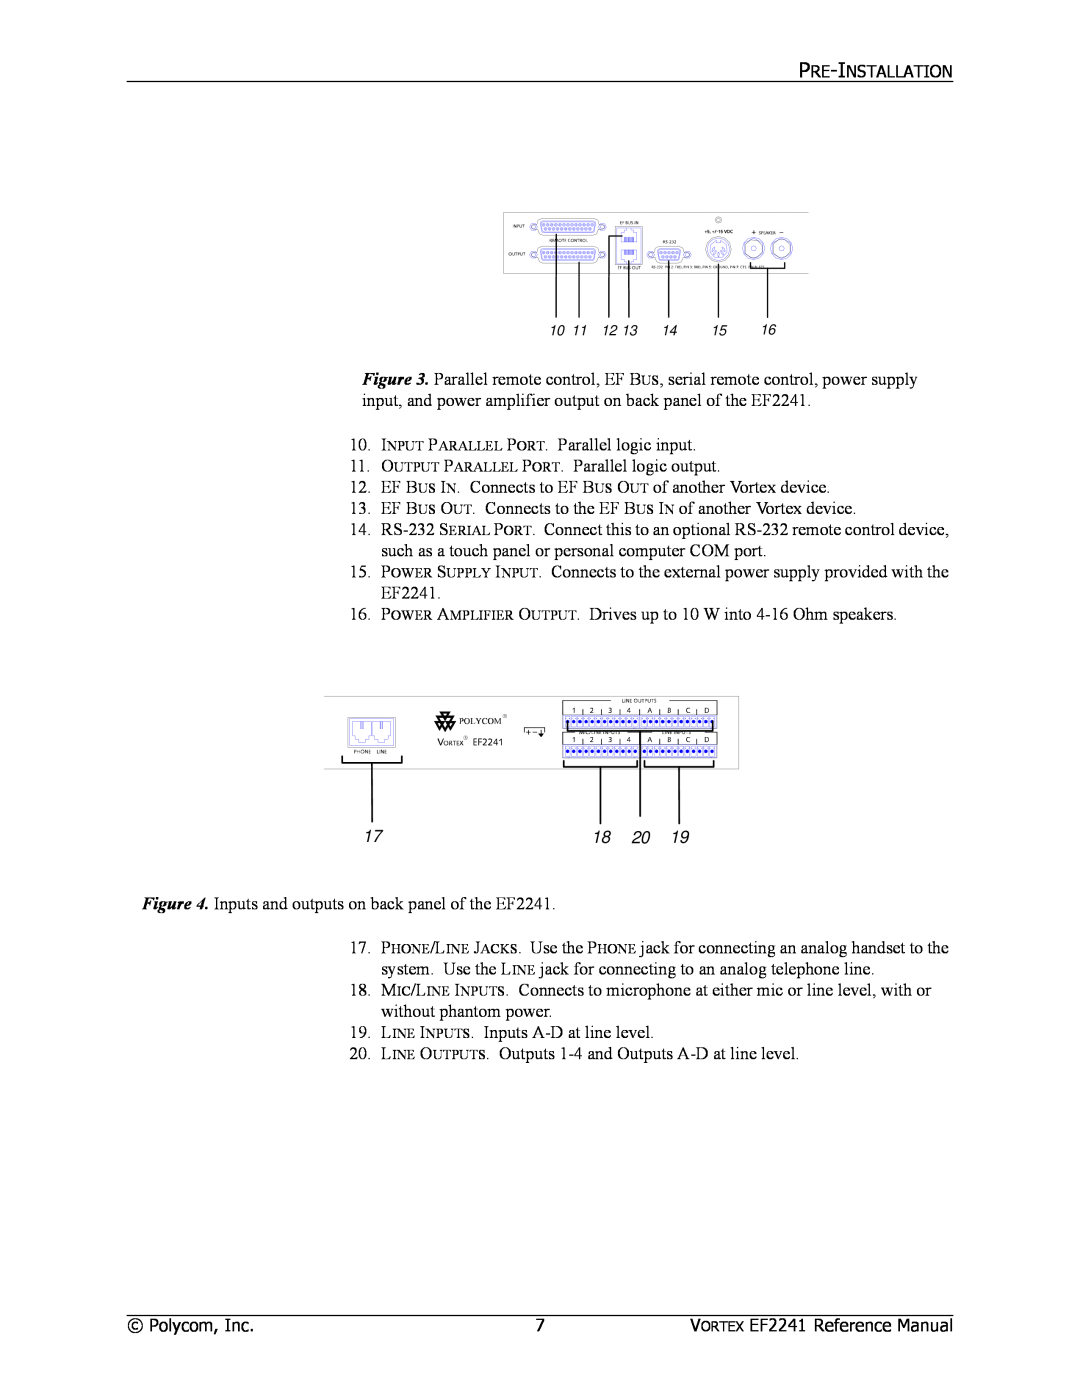 Polycom EF2241 manual INPUT PARALLEL PORT. Parallel logic input 